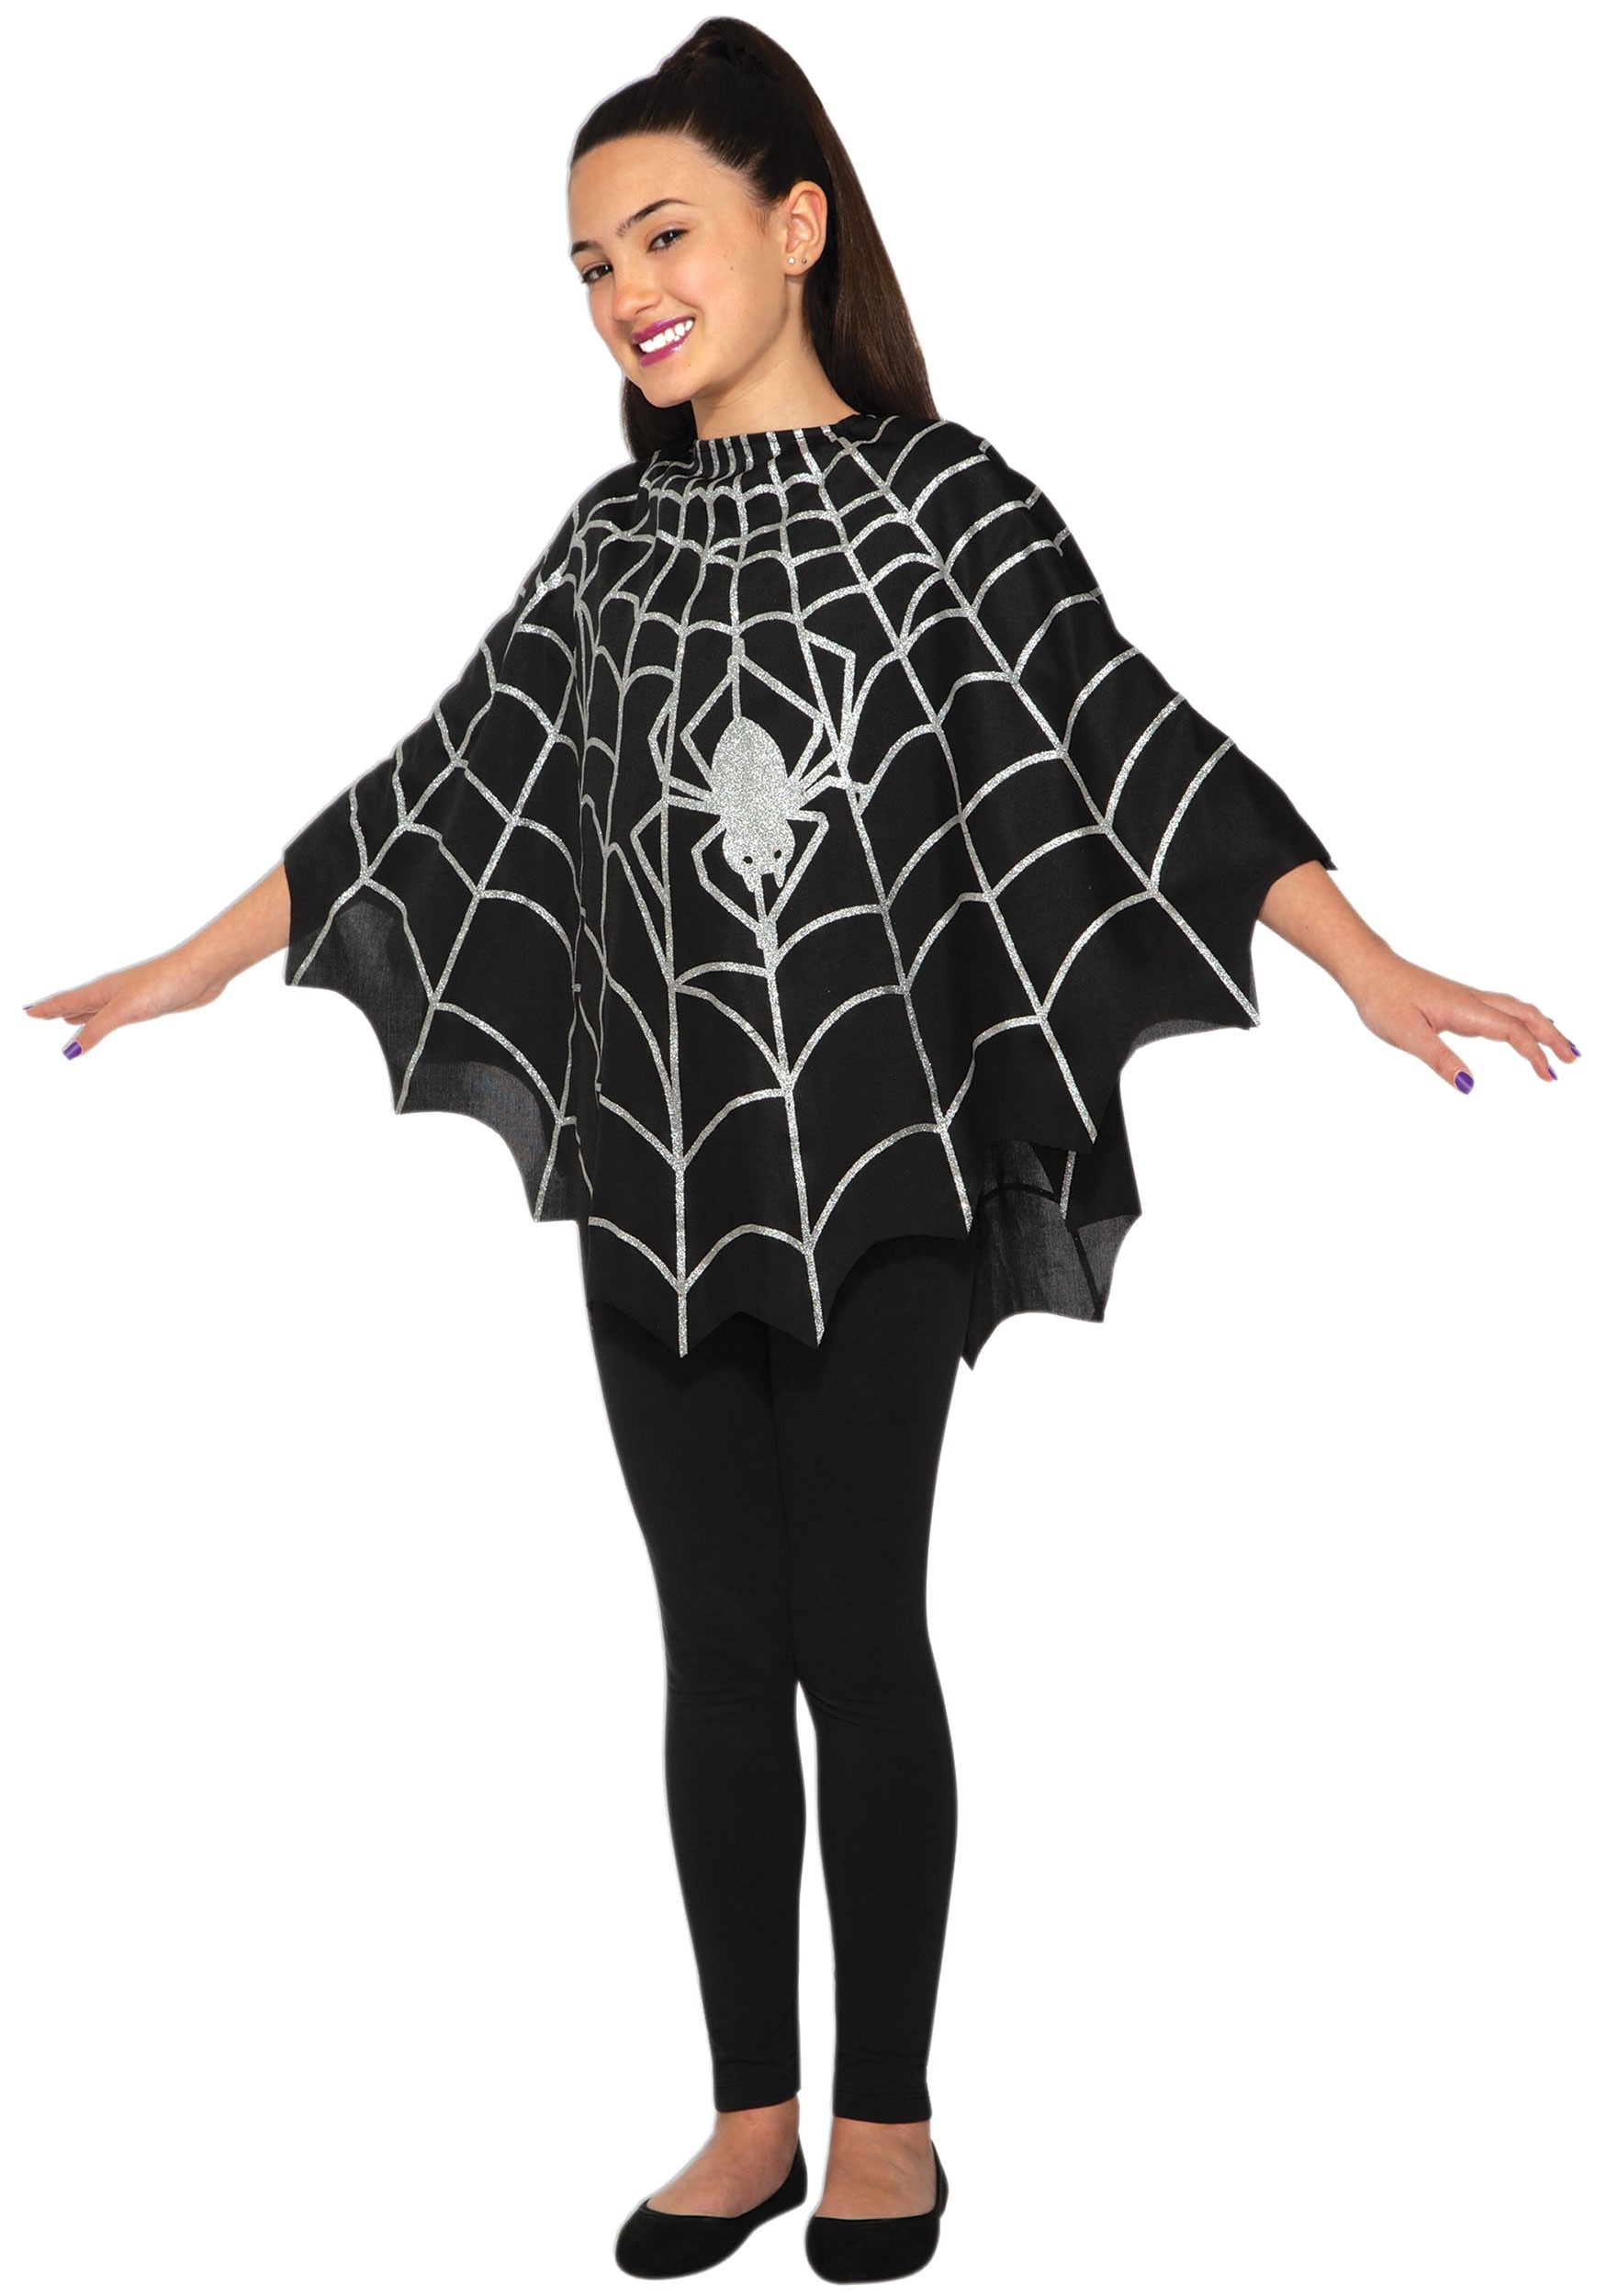 Kid's Black Spider Poncho Costume